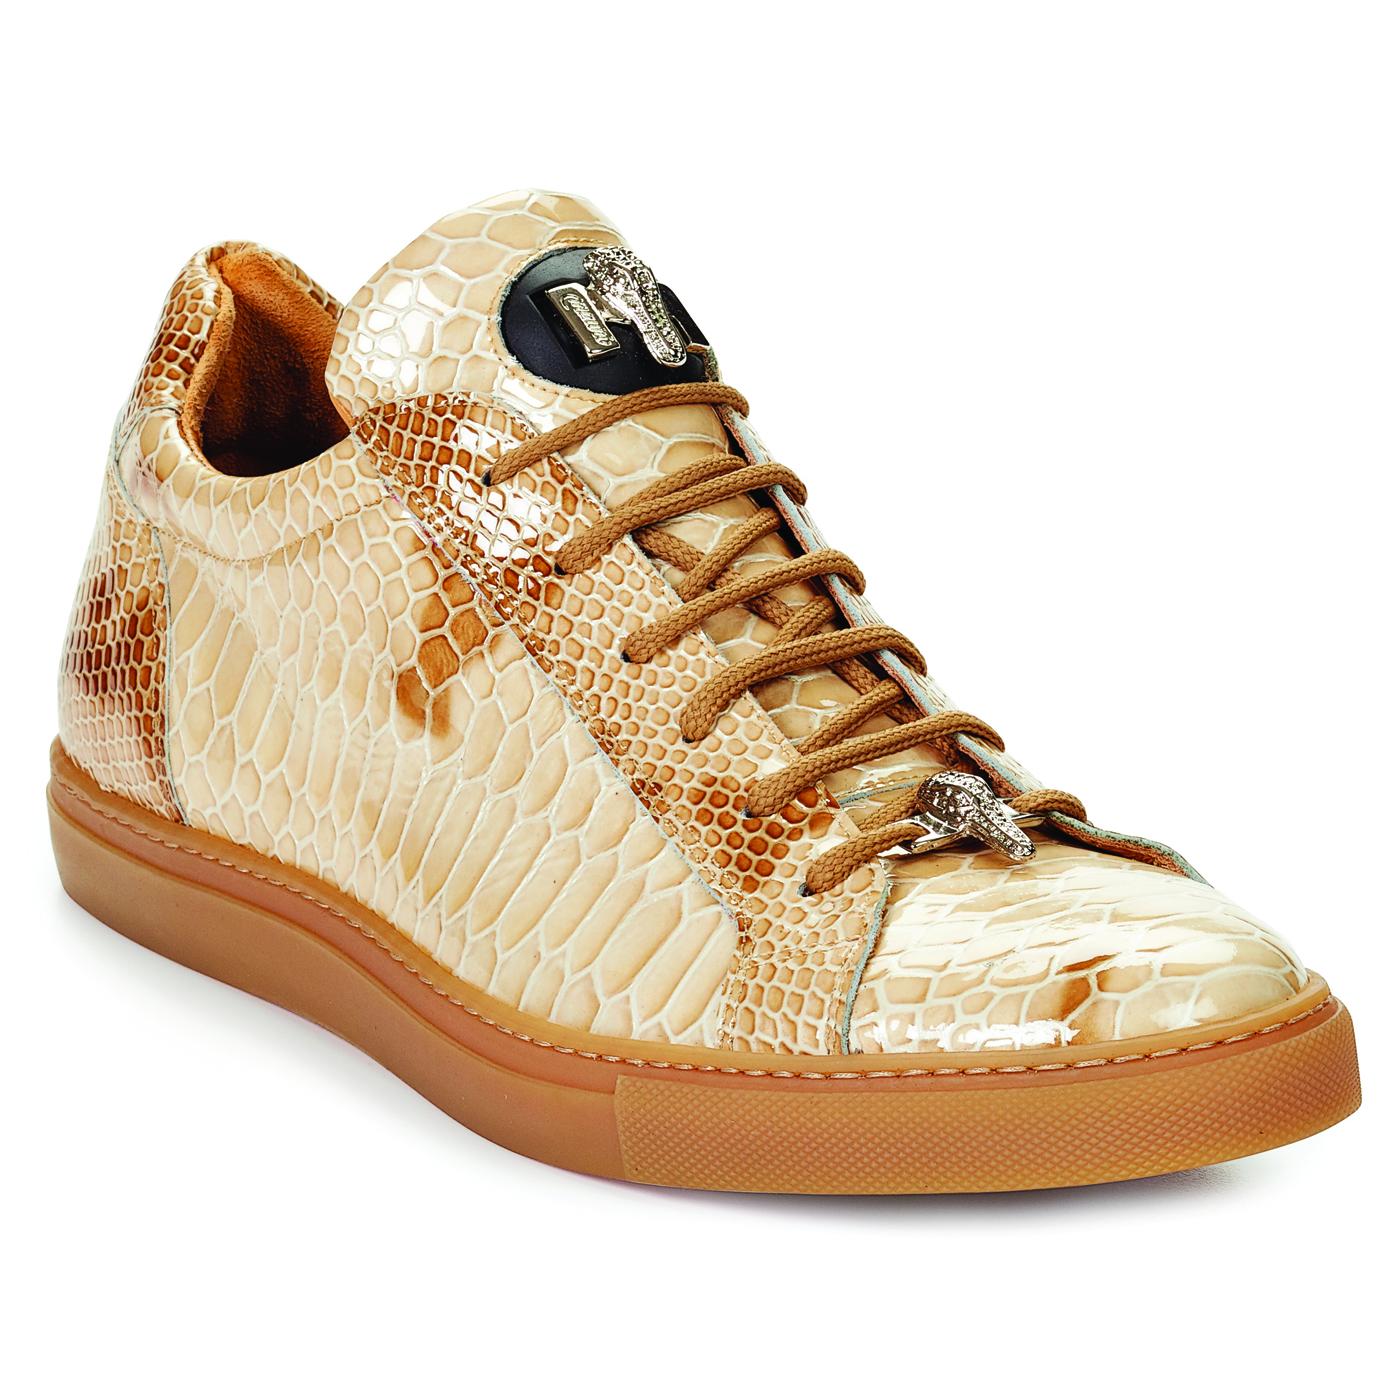 Mauri 8825/1 Beige Genuine Malabo Casual Sneakers. - $479.90 :: Upscale ...